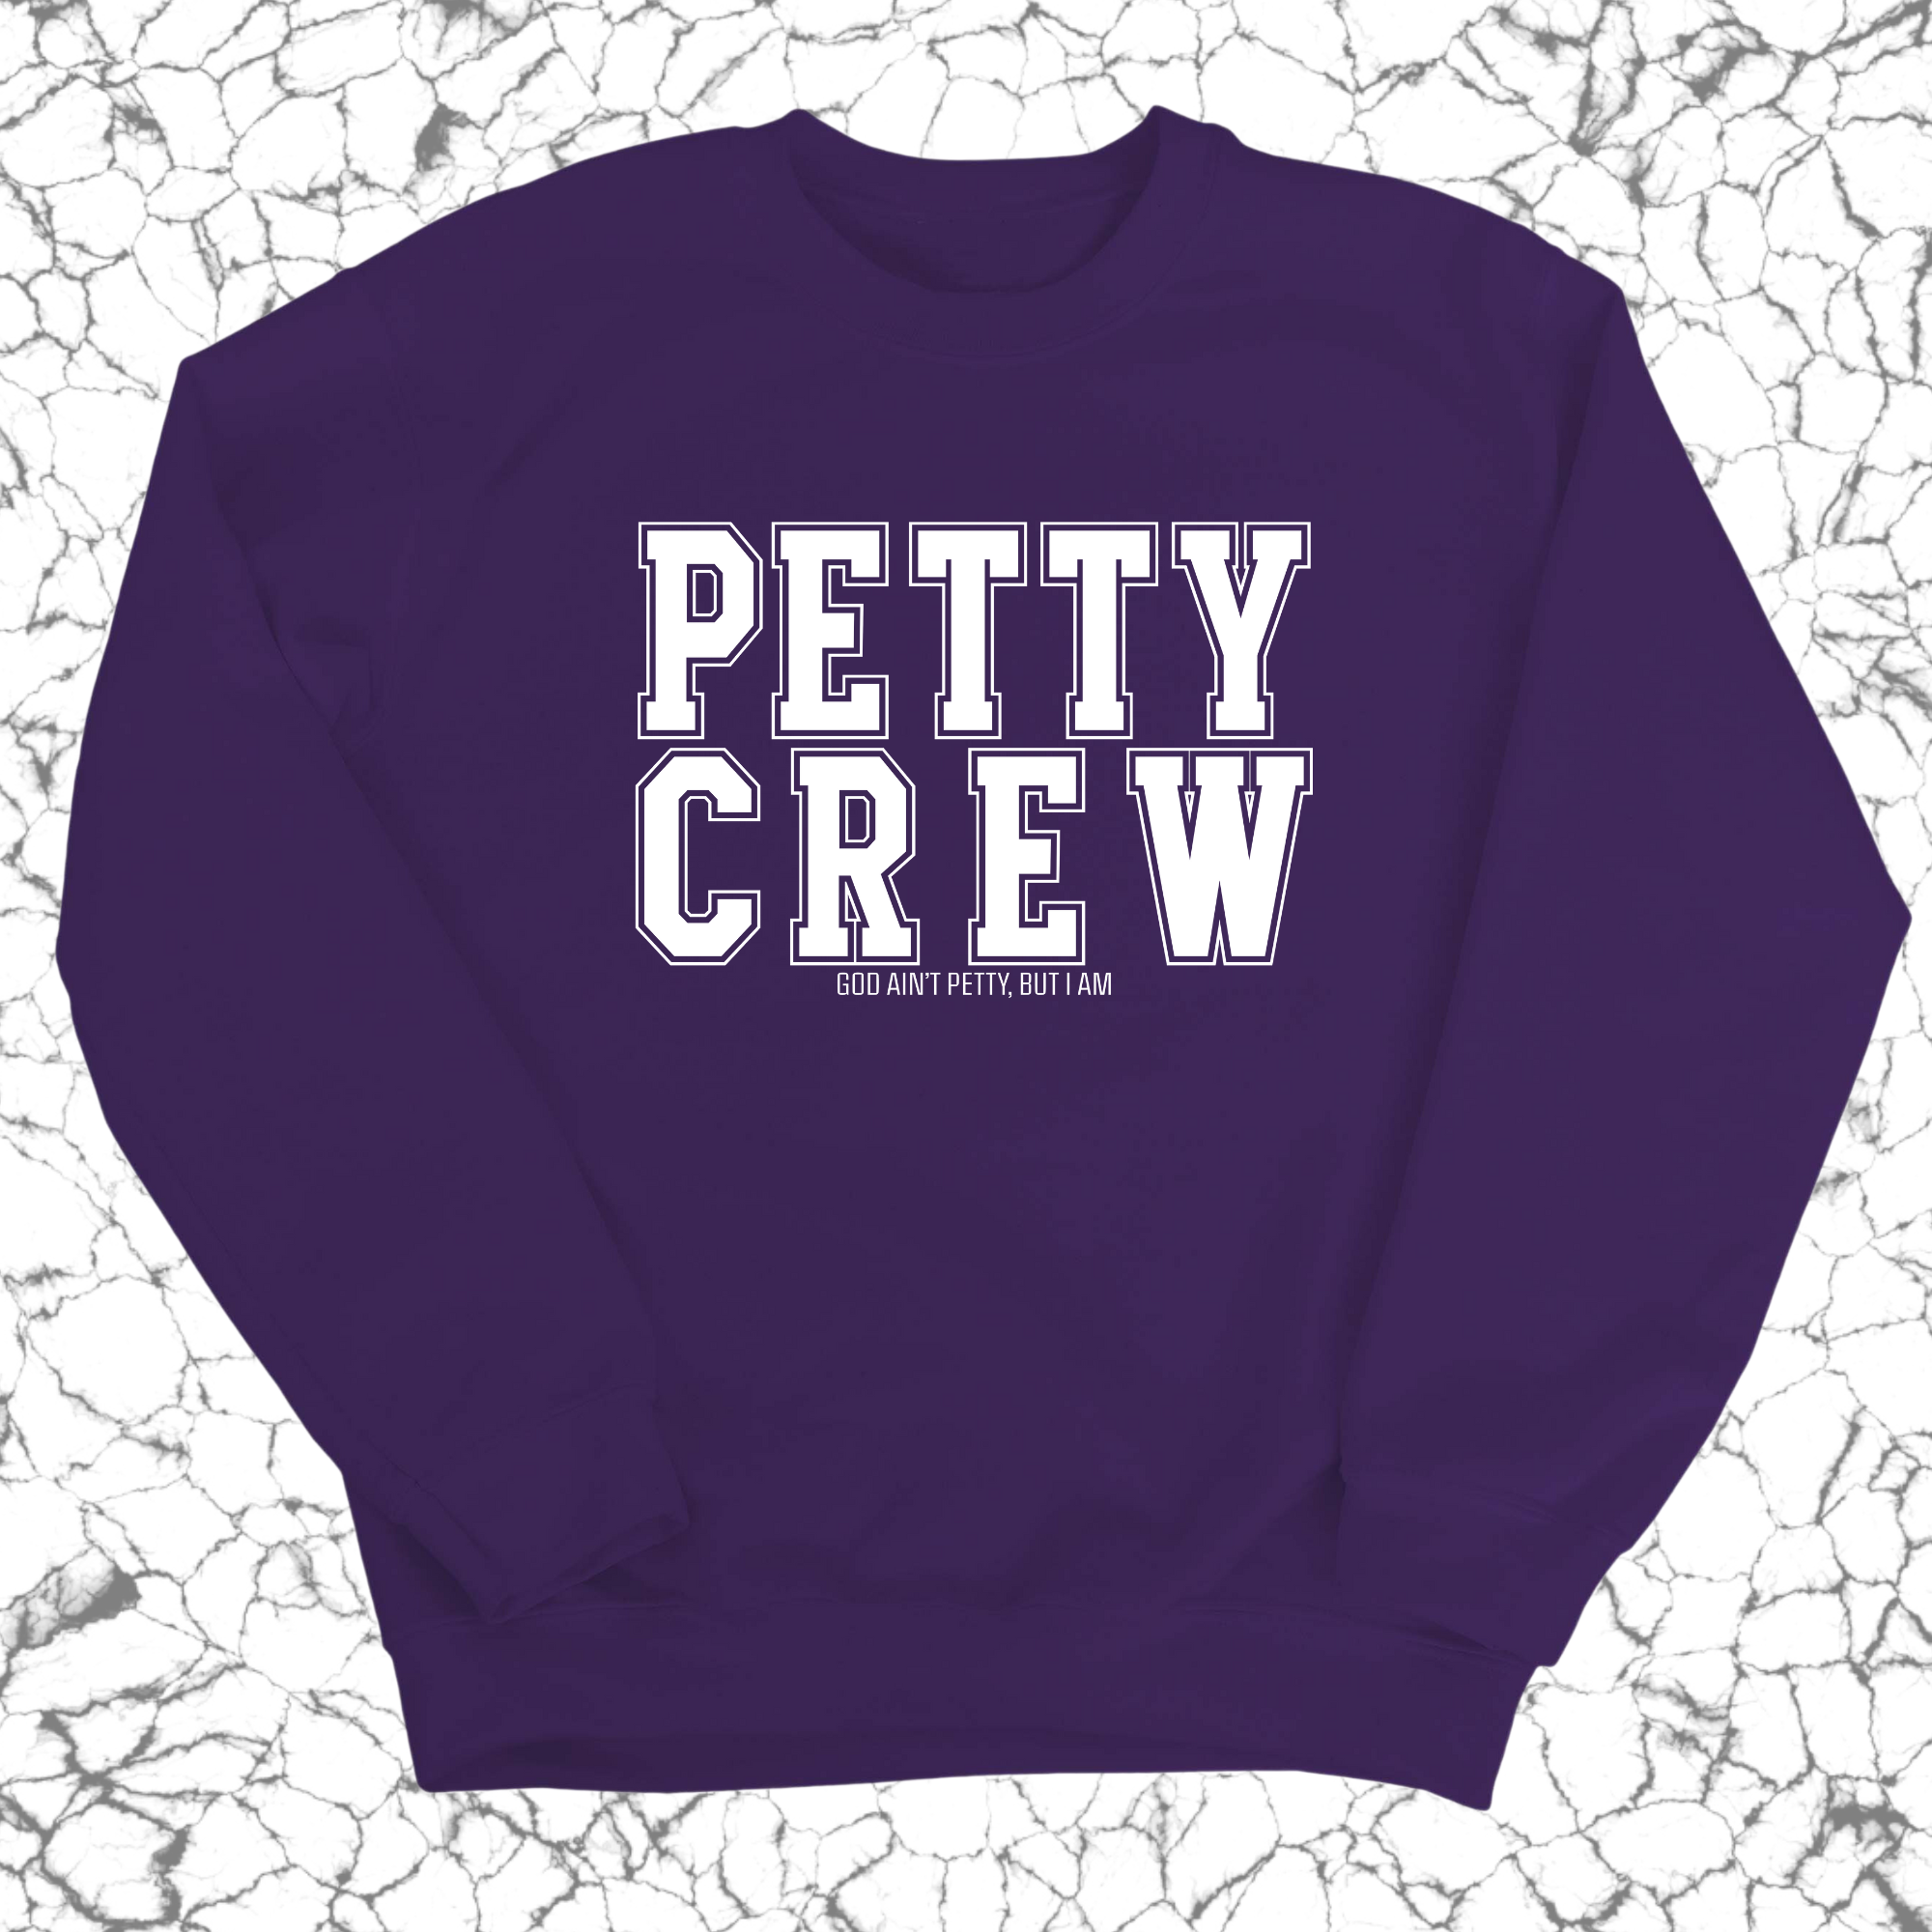 Petty Crew Unisex Sweatshirt-Sweatshirt-The Original God Ain't Petty But I Am